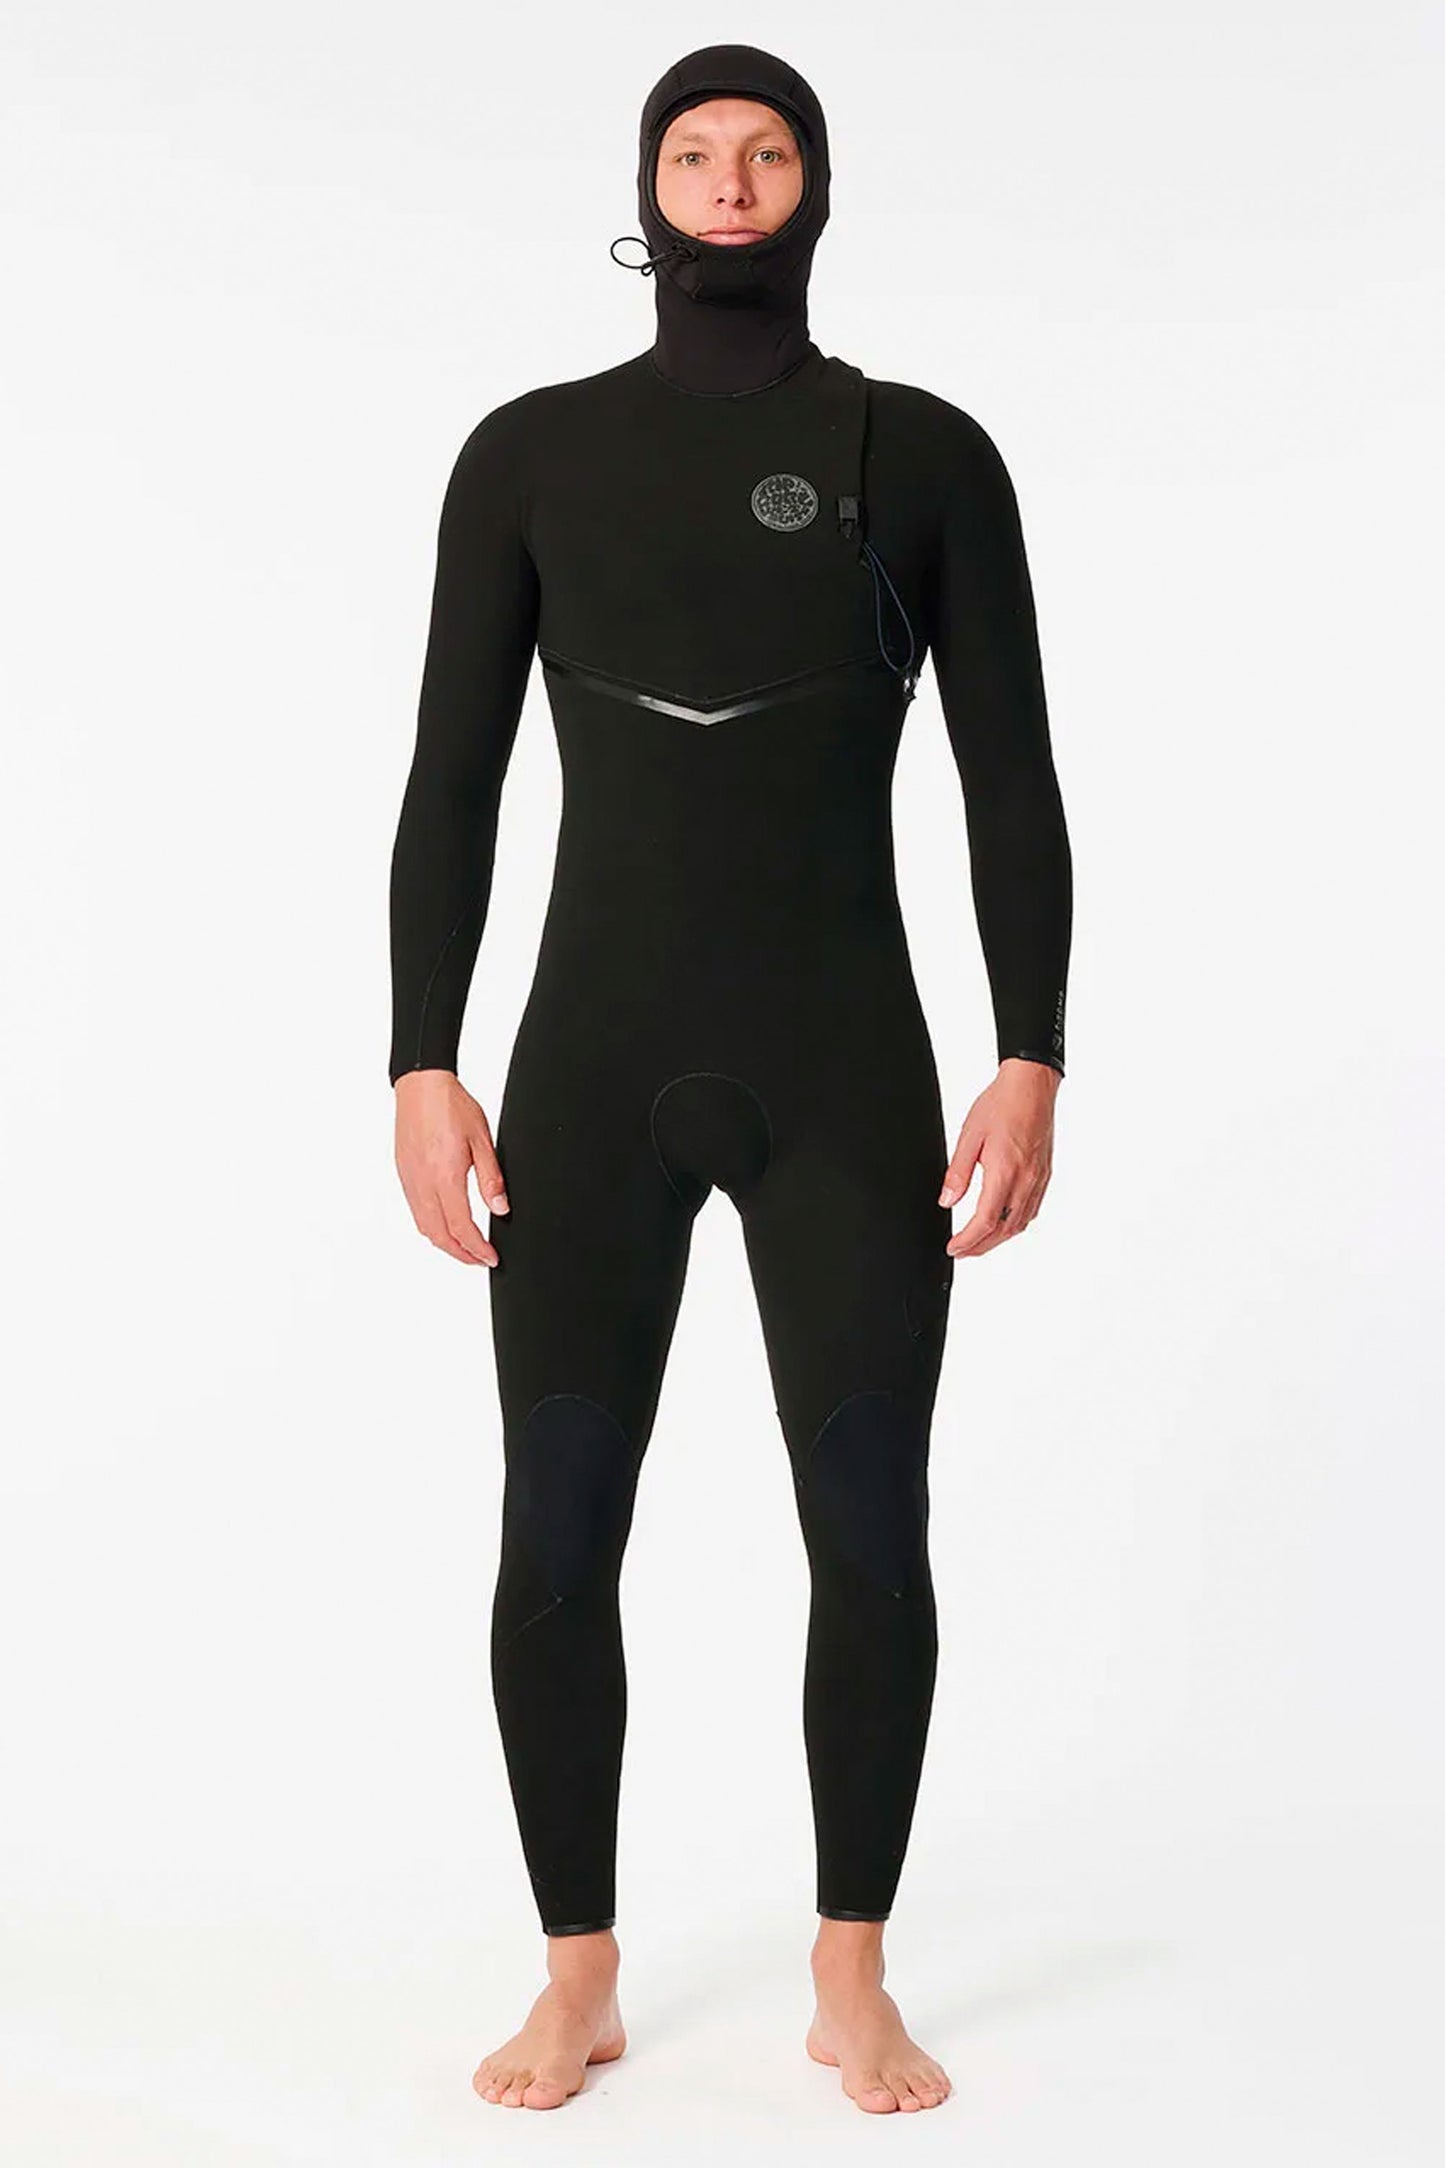 Pukas-Surf-Shop-rip-curl-wetsuit-winter-E-bomb-4-3mm-hooded-black